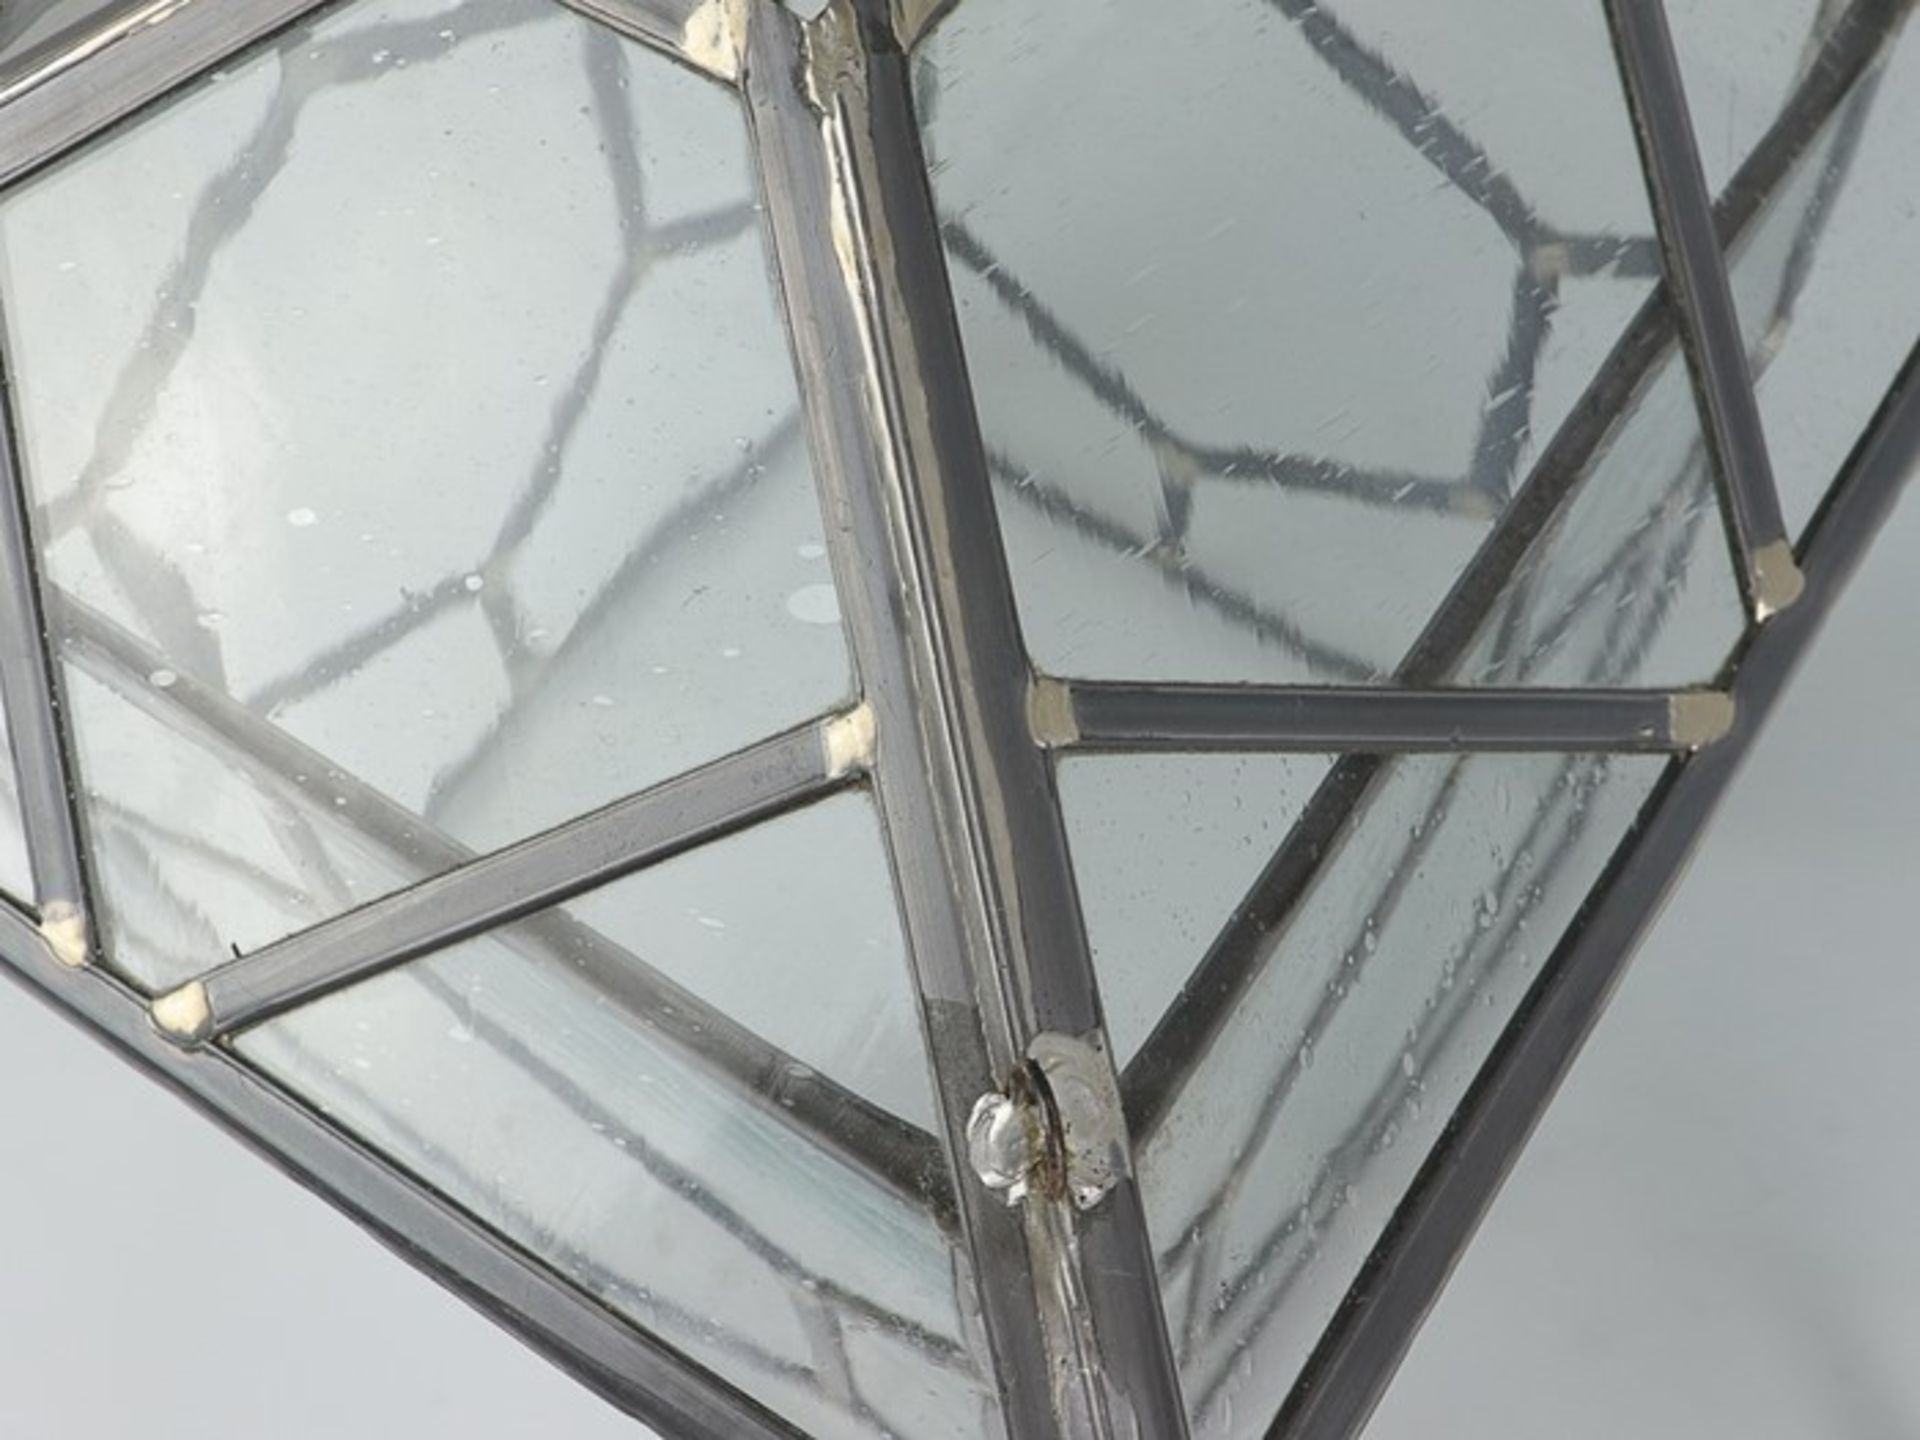 Deckenlaternen - PaarMetall/Glas, bleiverglaster Korpus, gitterförmiger polygonaler Bleidekor, - Image 4 of 4